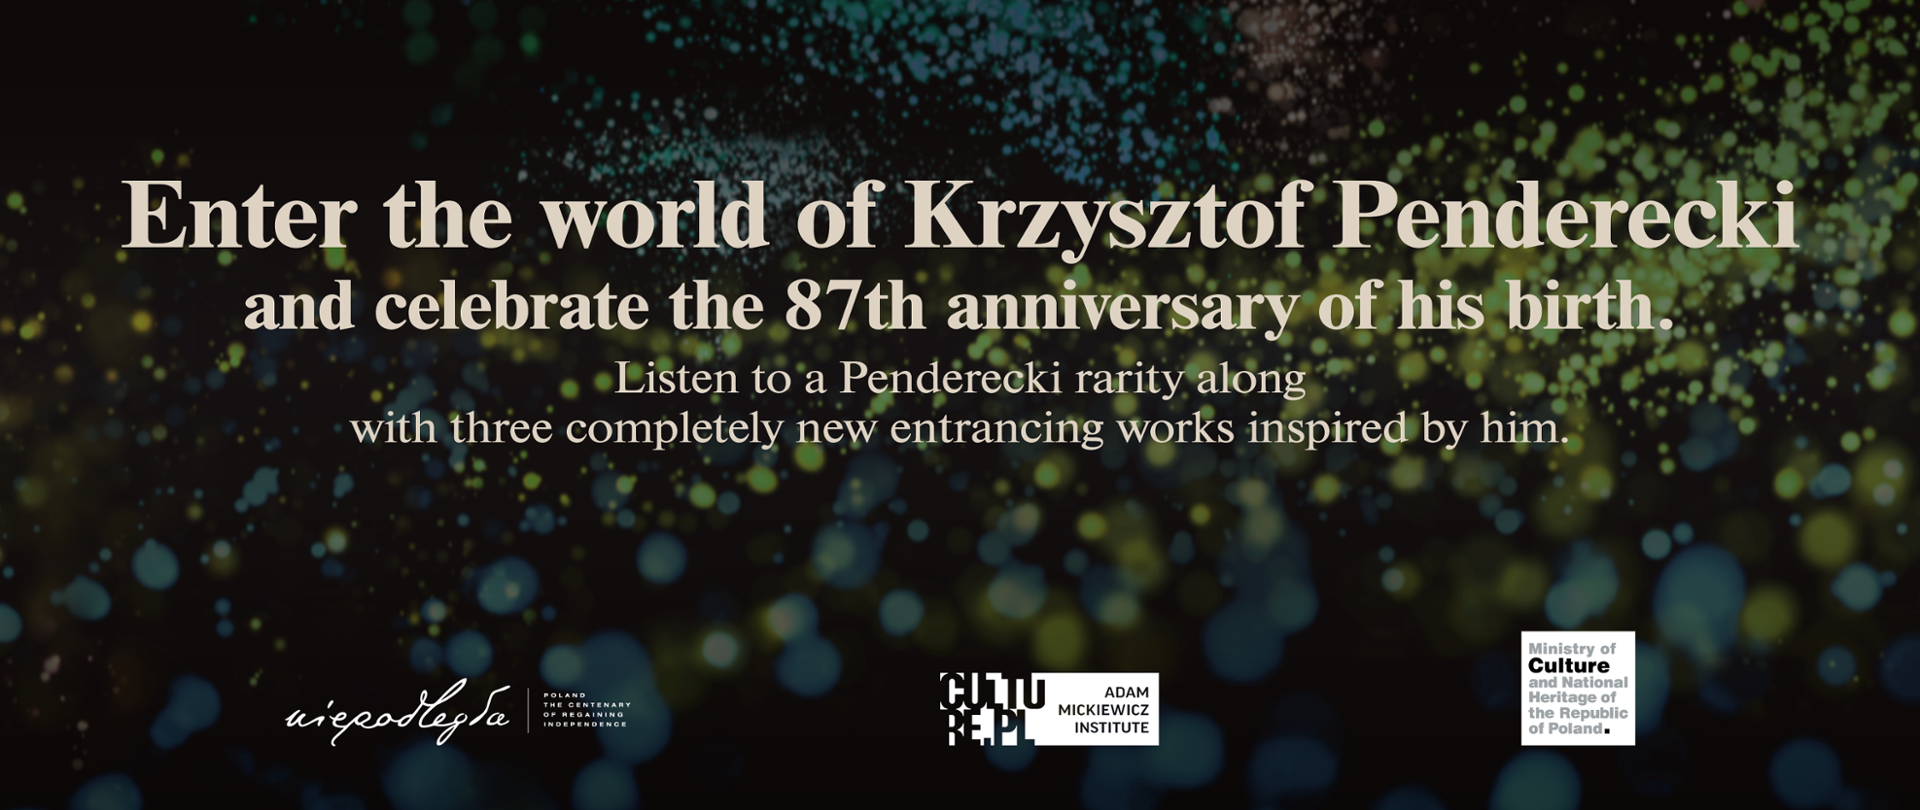 The Adam Mickiewicz Institute is releasing a vinyl record dedicated to Krzysztof Penderecki